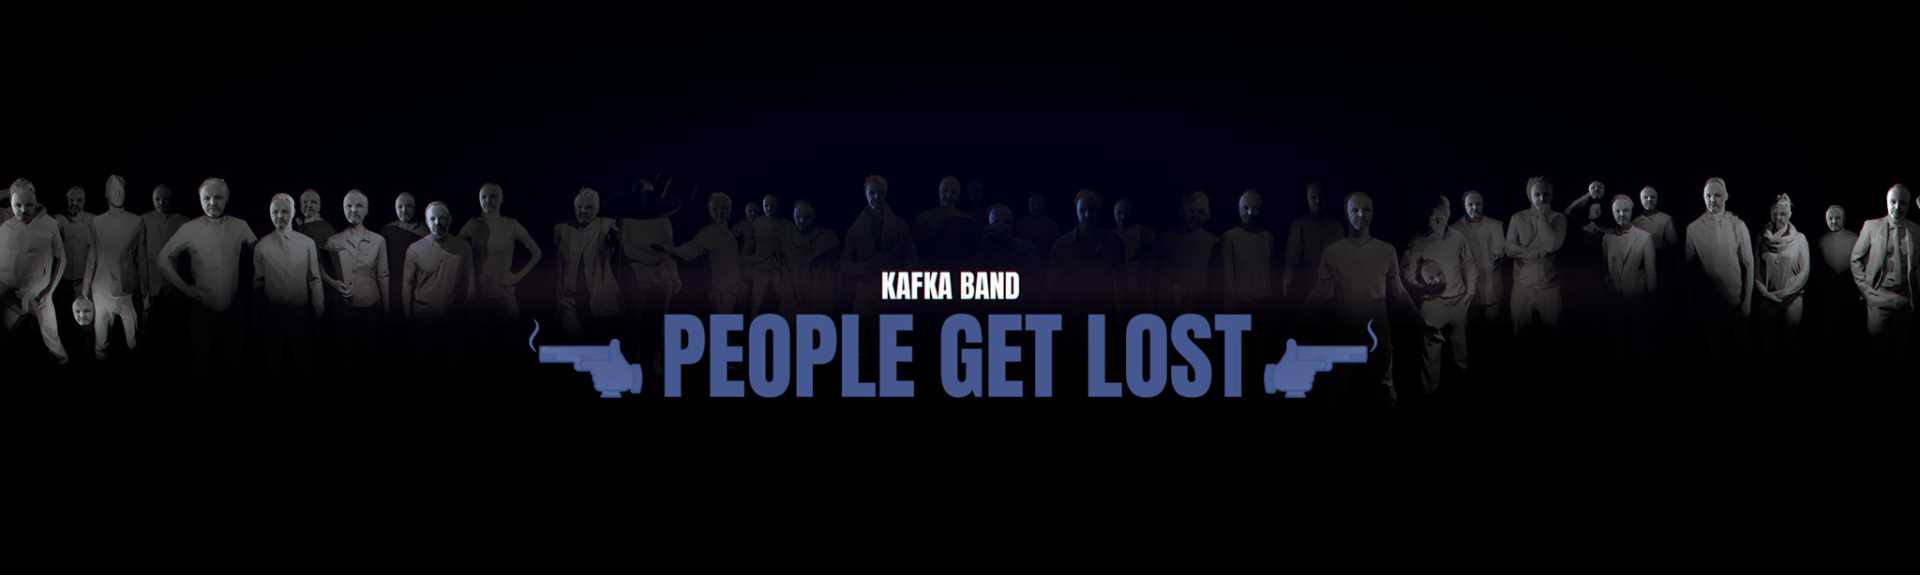 Kafka Band People Get Lost